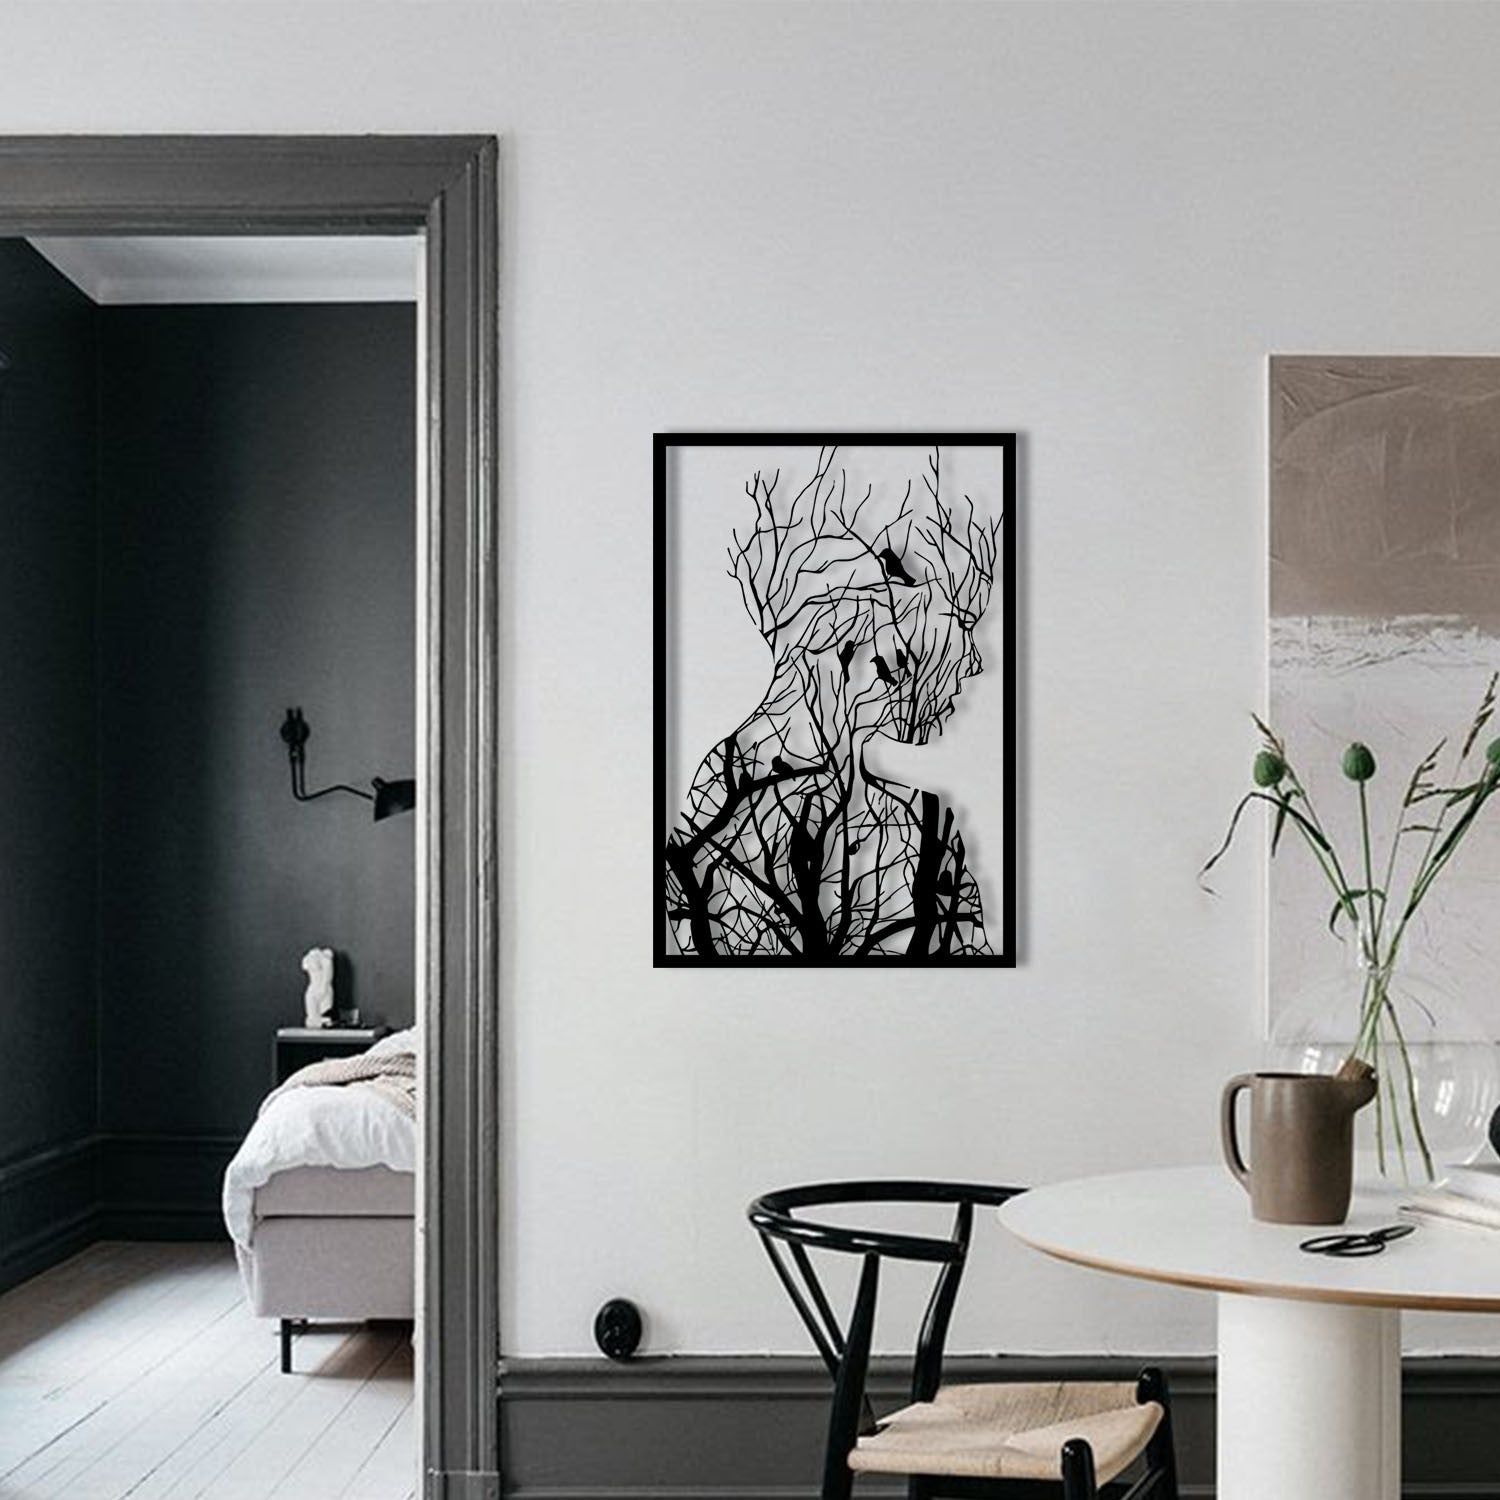 Decoratiune perete Arakan, negru, metal 100%, 42x62 cm